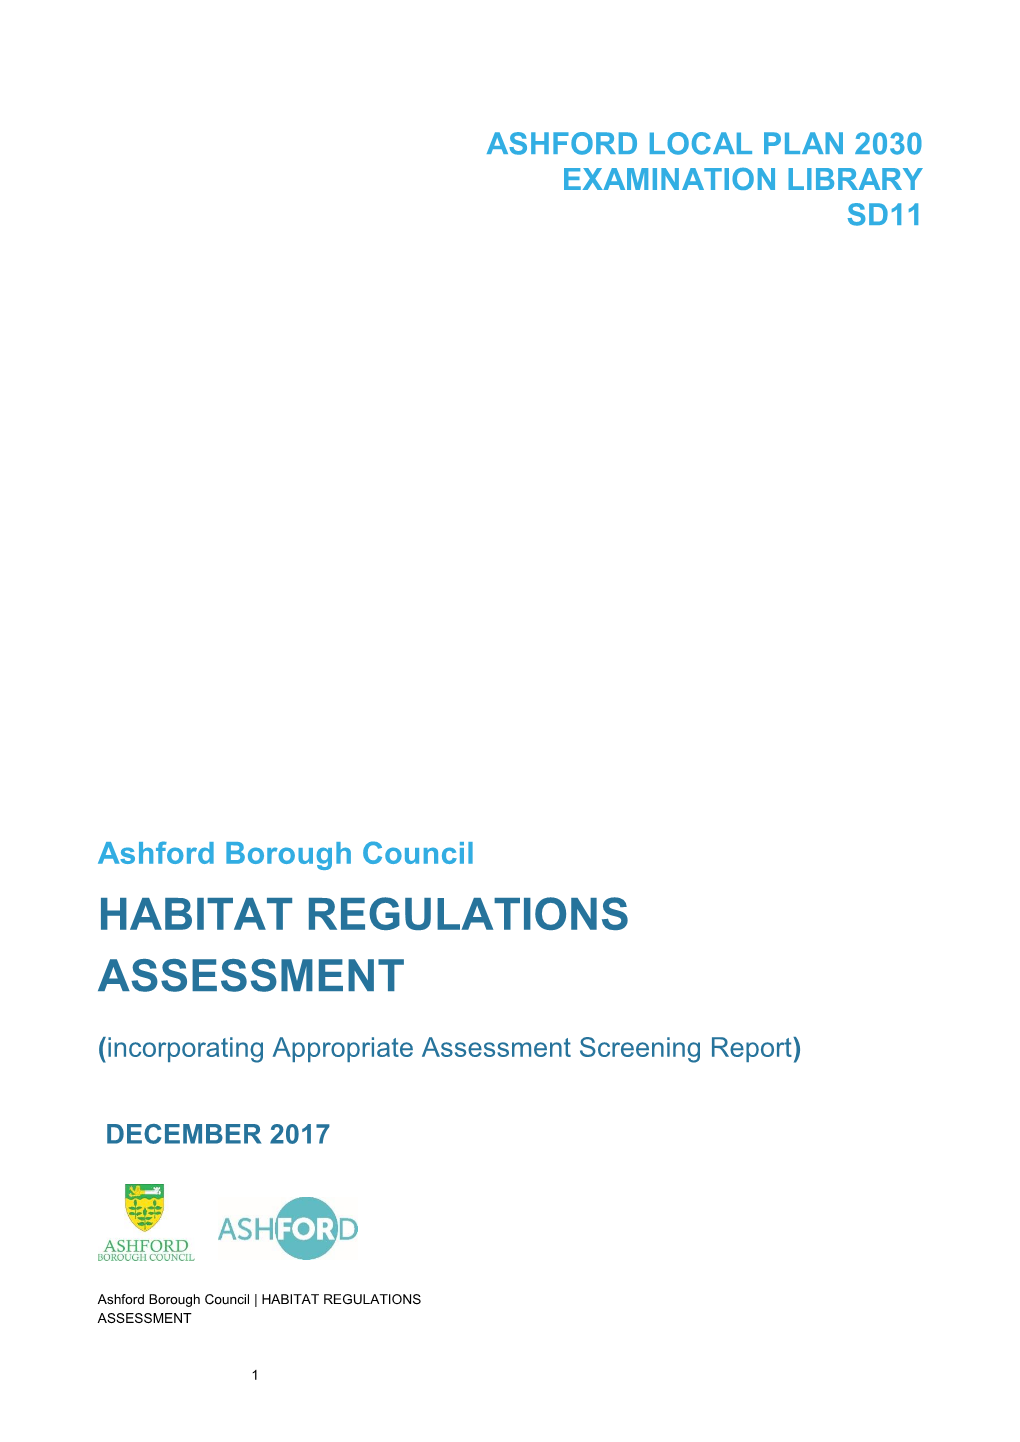 Habitat Regulations Assessment